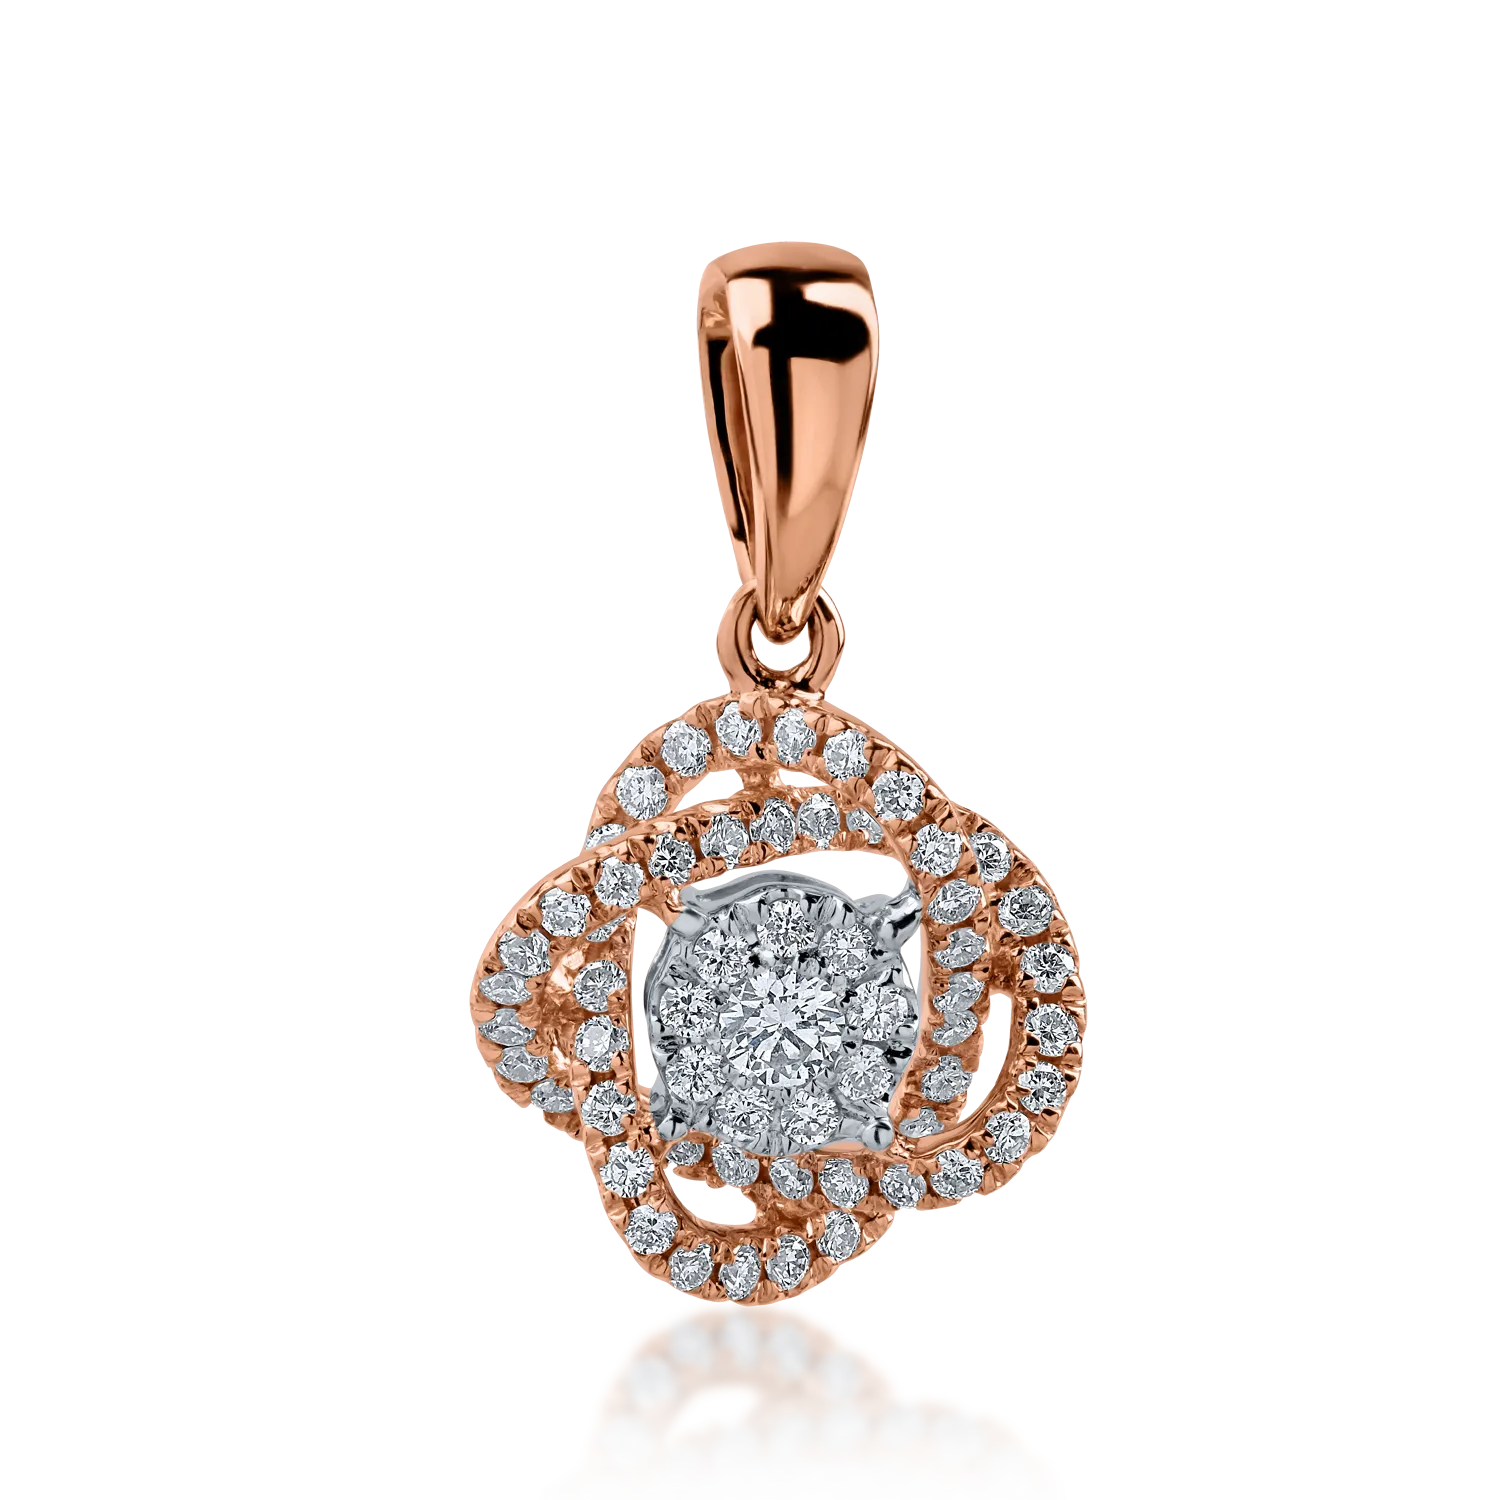 Rose gold pendant with 0.271ct diamonds